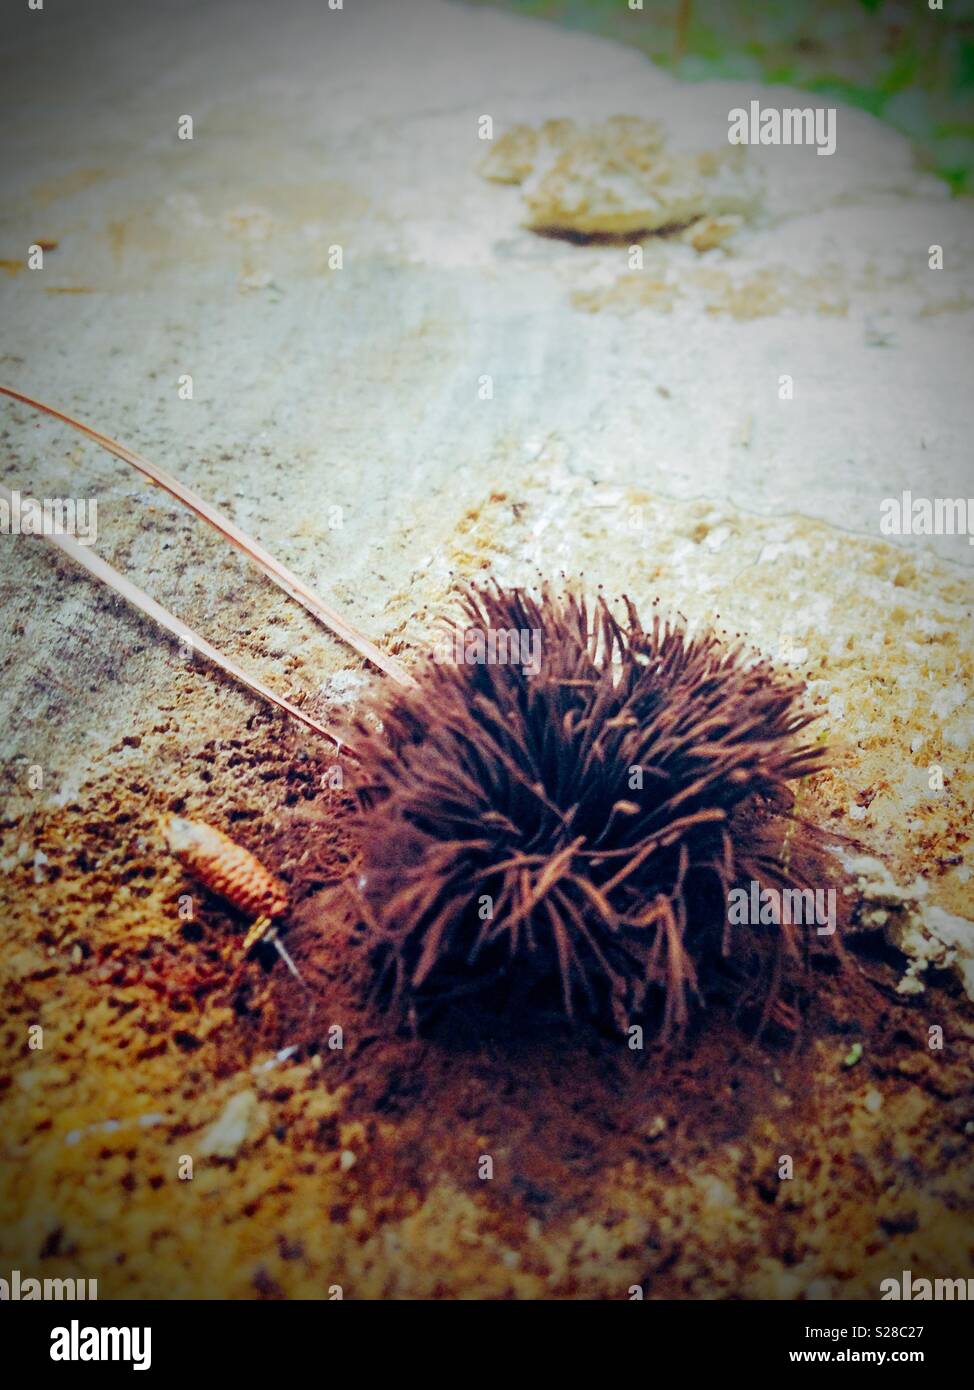 Strange urchin-like fungus growing on dead tree stump Stock Photo